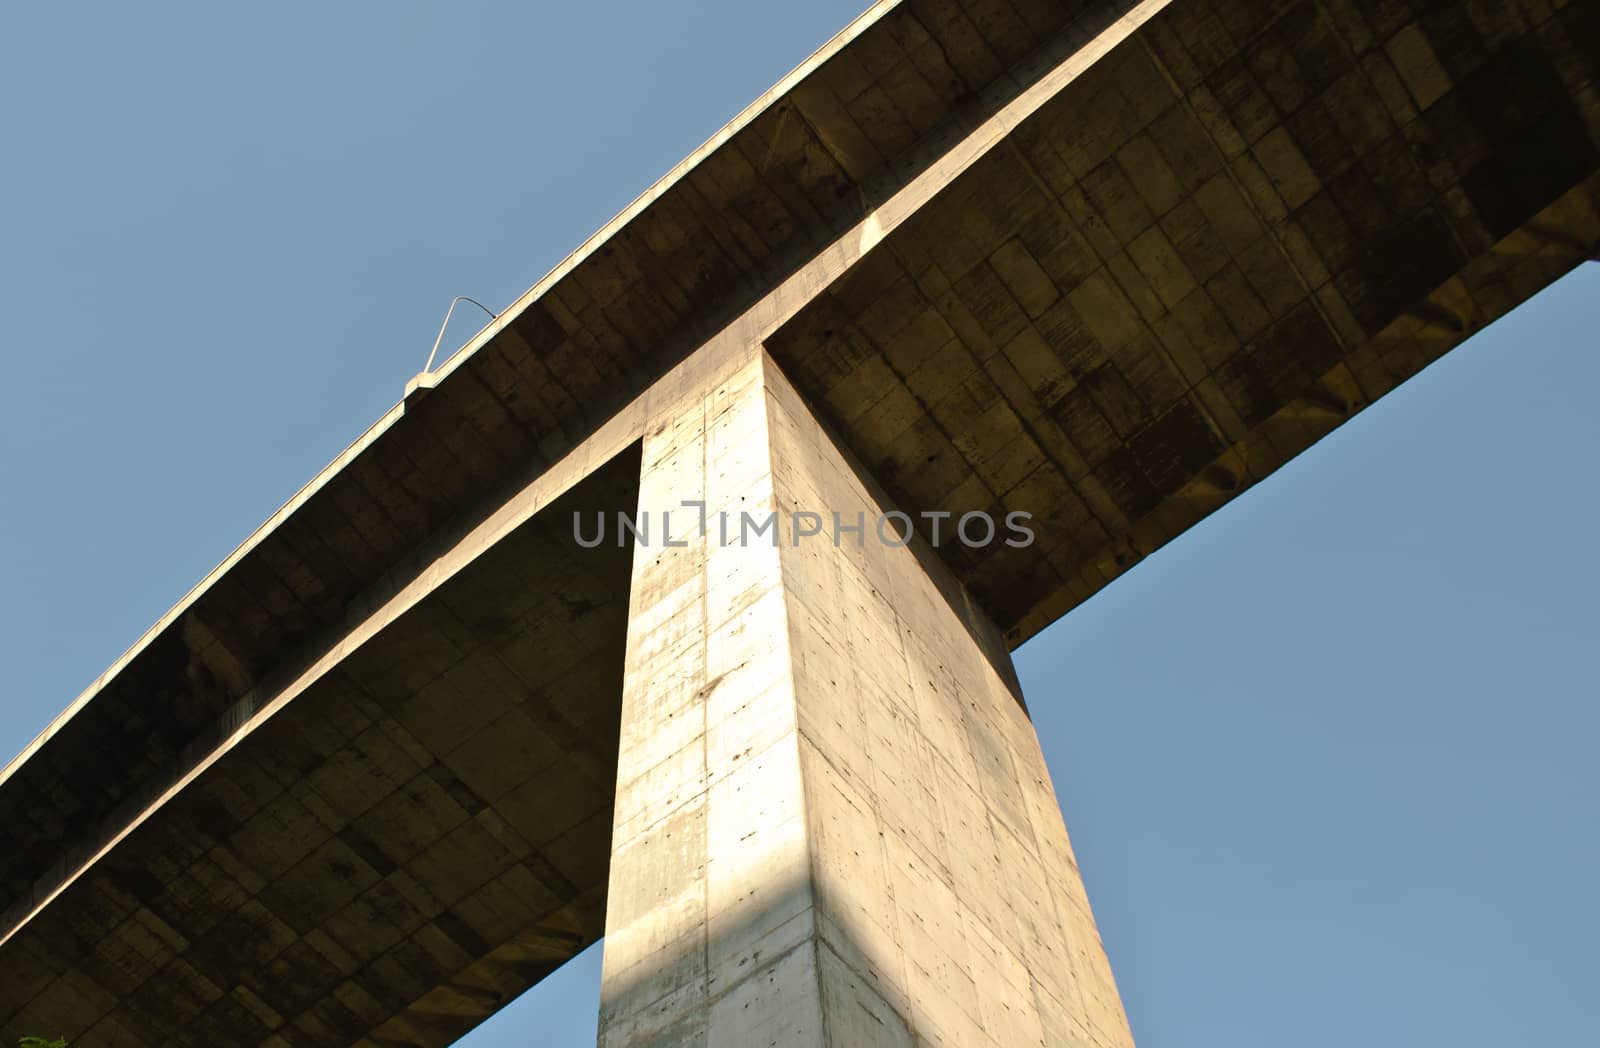 Under the Bridge by gigiobbr